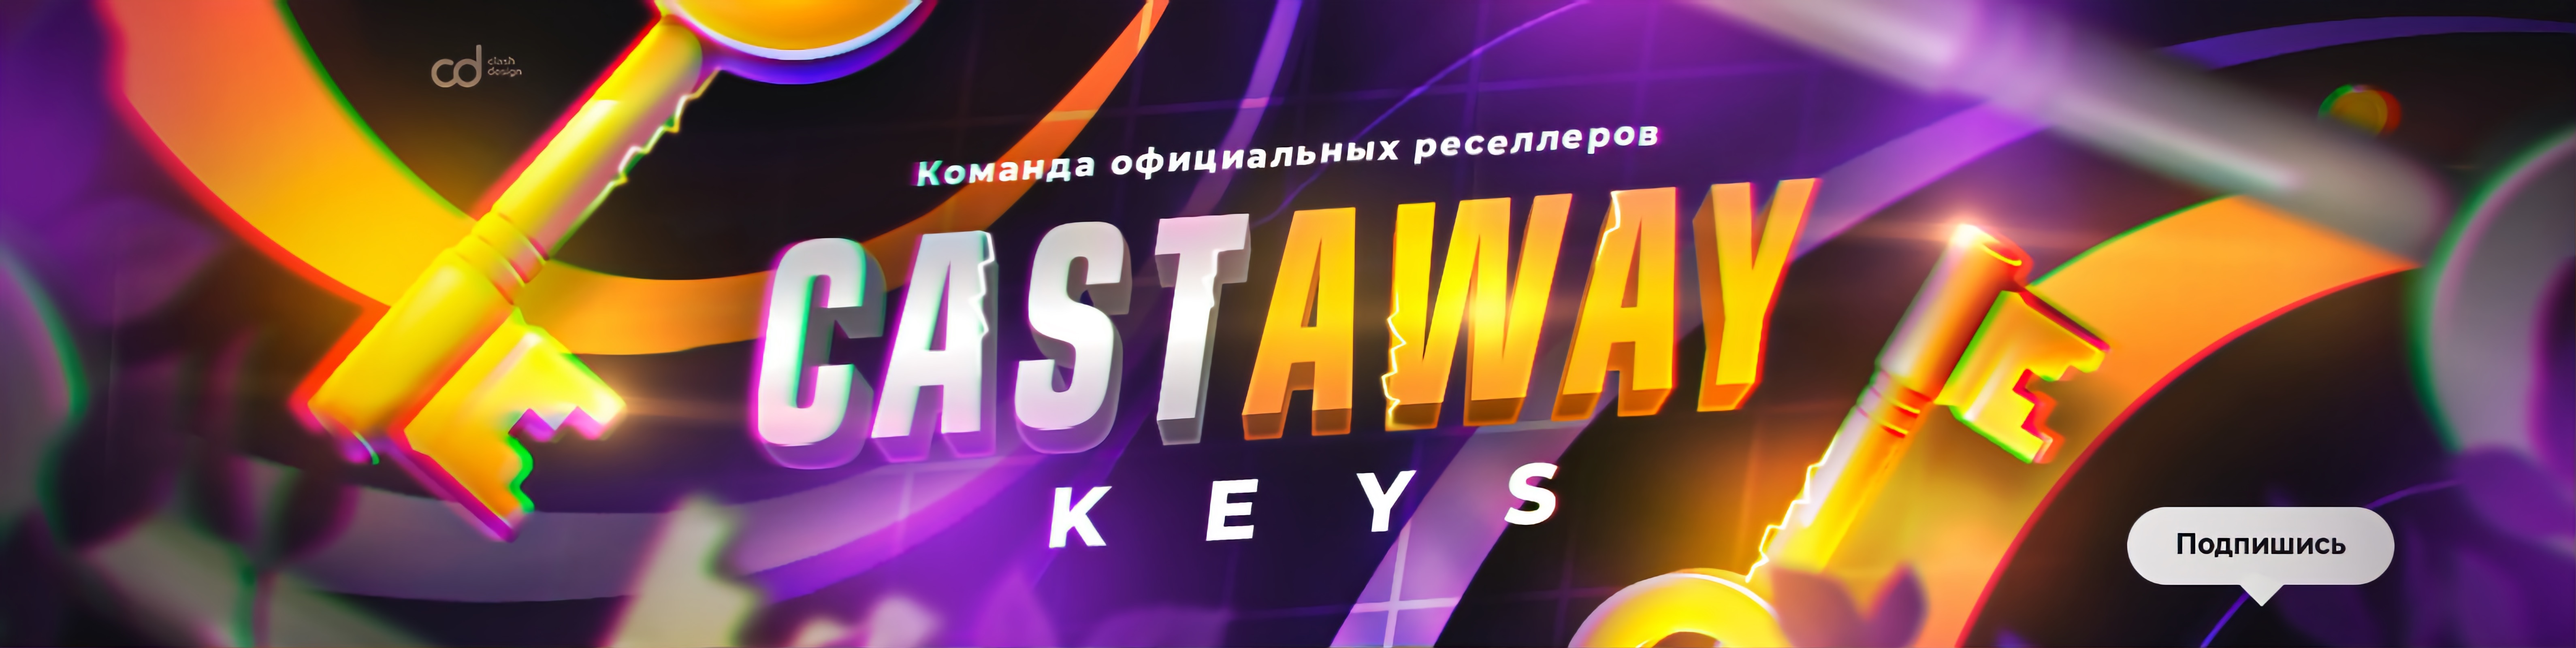 Castaway keys pubg фото 11